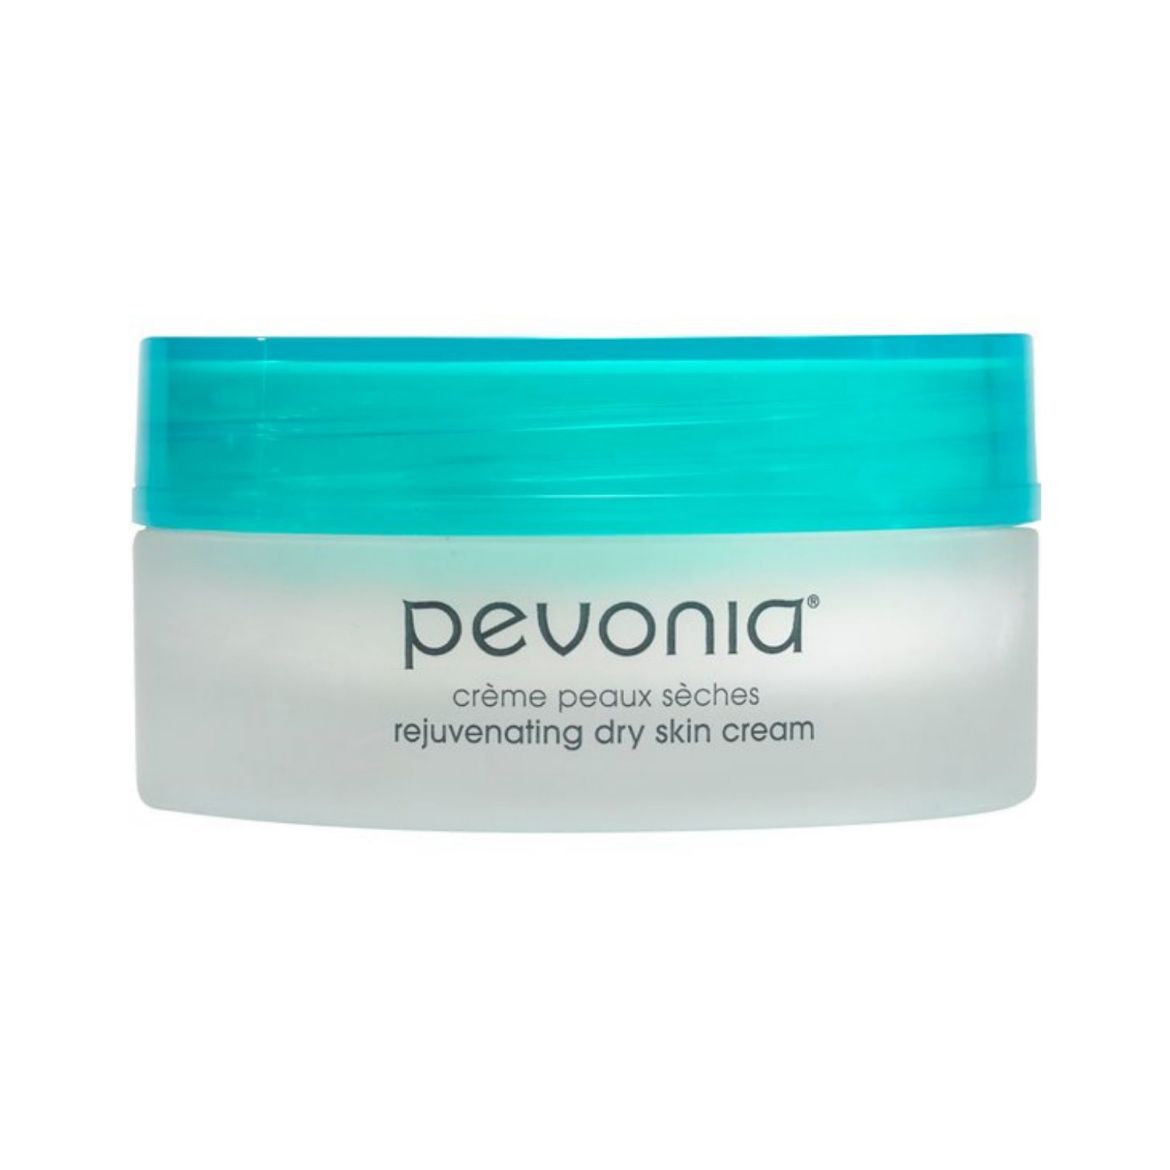 Image of Pevonia Rejuvenating Dry Skin Cream (50ml)